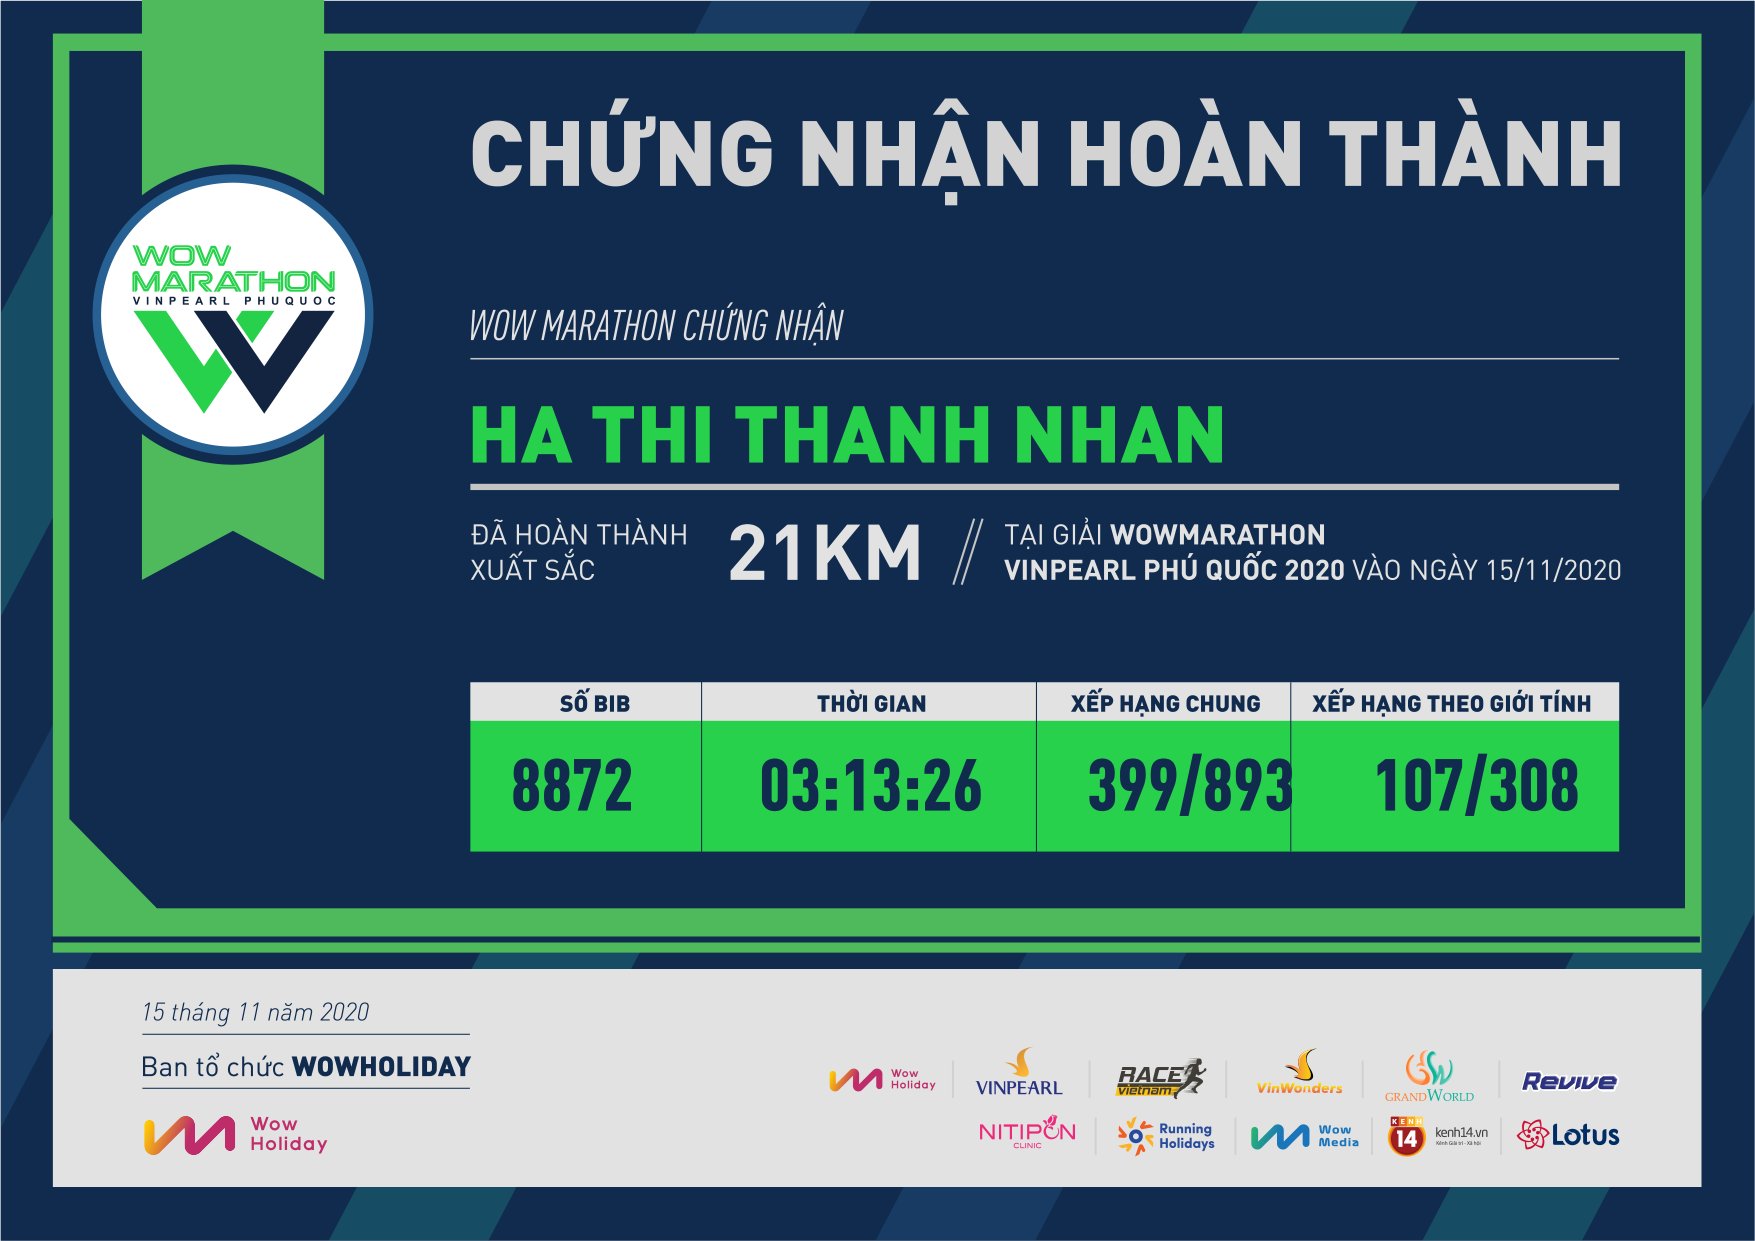 8872 - Ha Thi Thanh Nhan